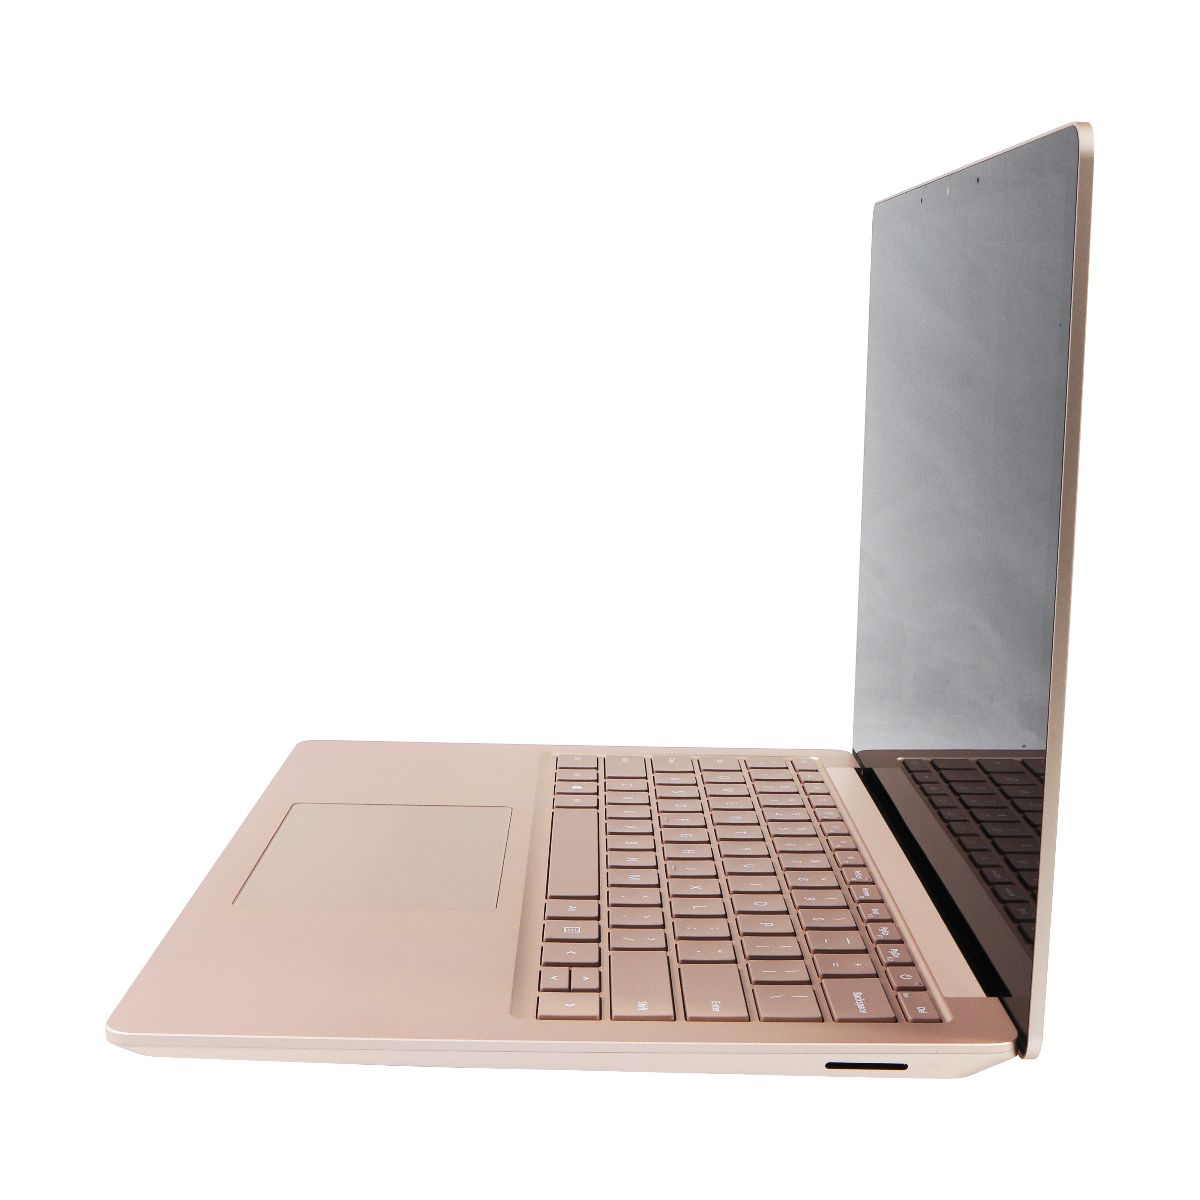 Microsoft Surface Laptop 3 (13.5-inch) 1868 (i5-1035G7/256GB/8GB) - Sandstone